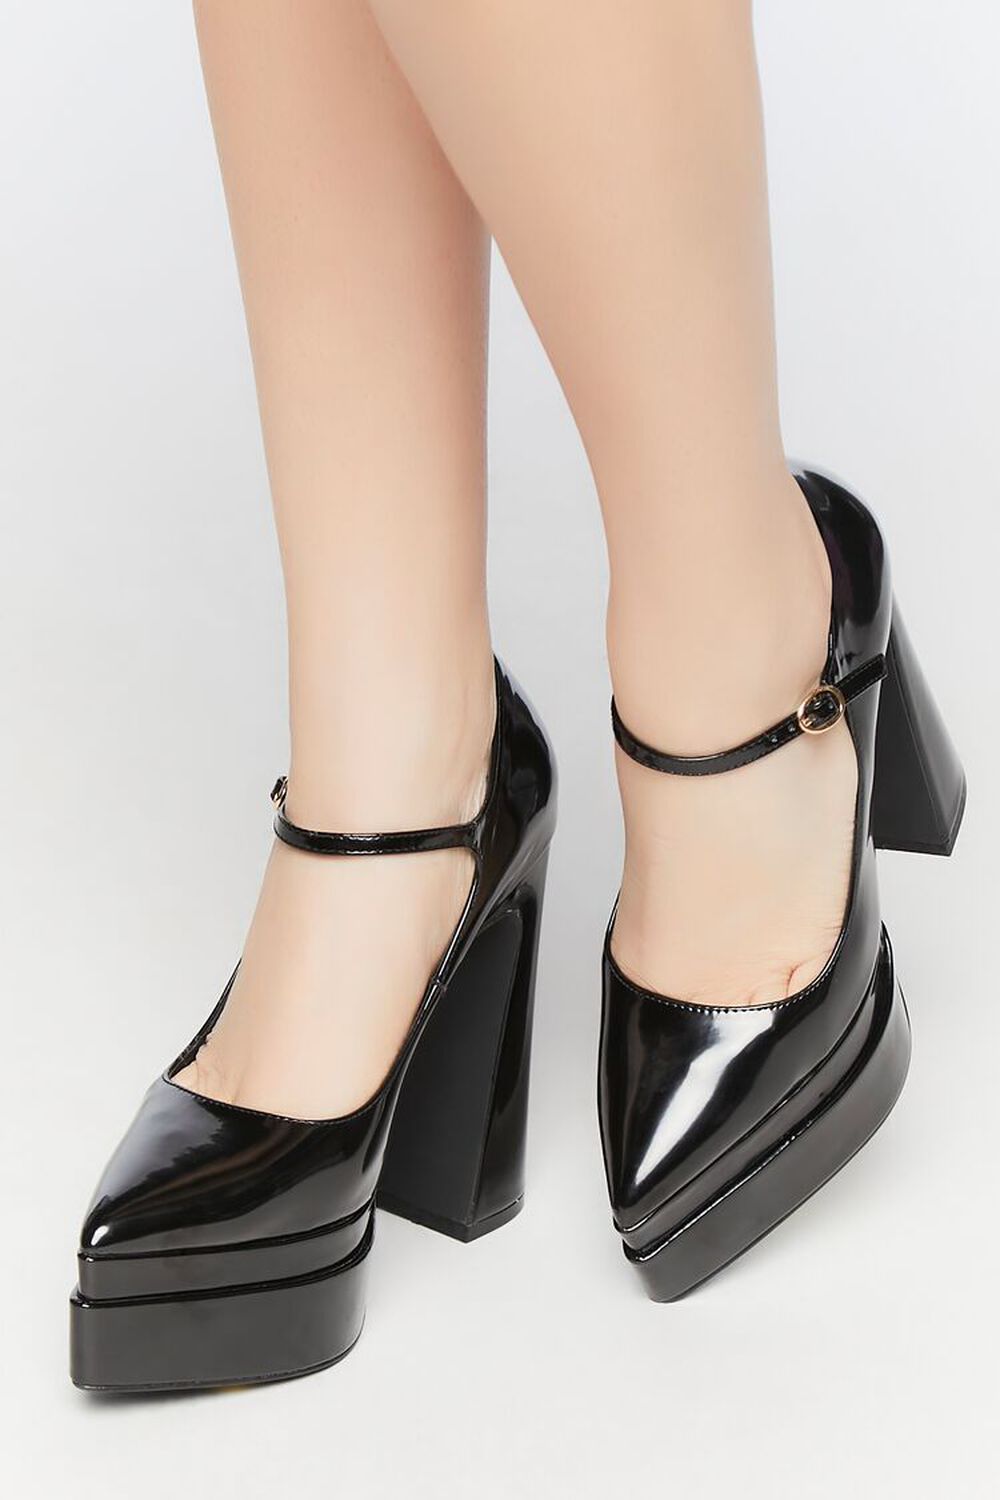 BLACK Mary Jane Pointed-Toe Platform Heels, image 1